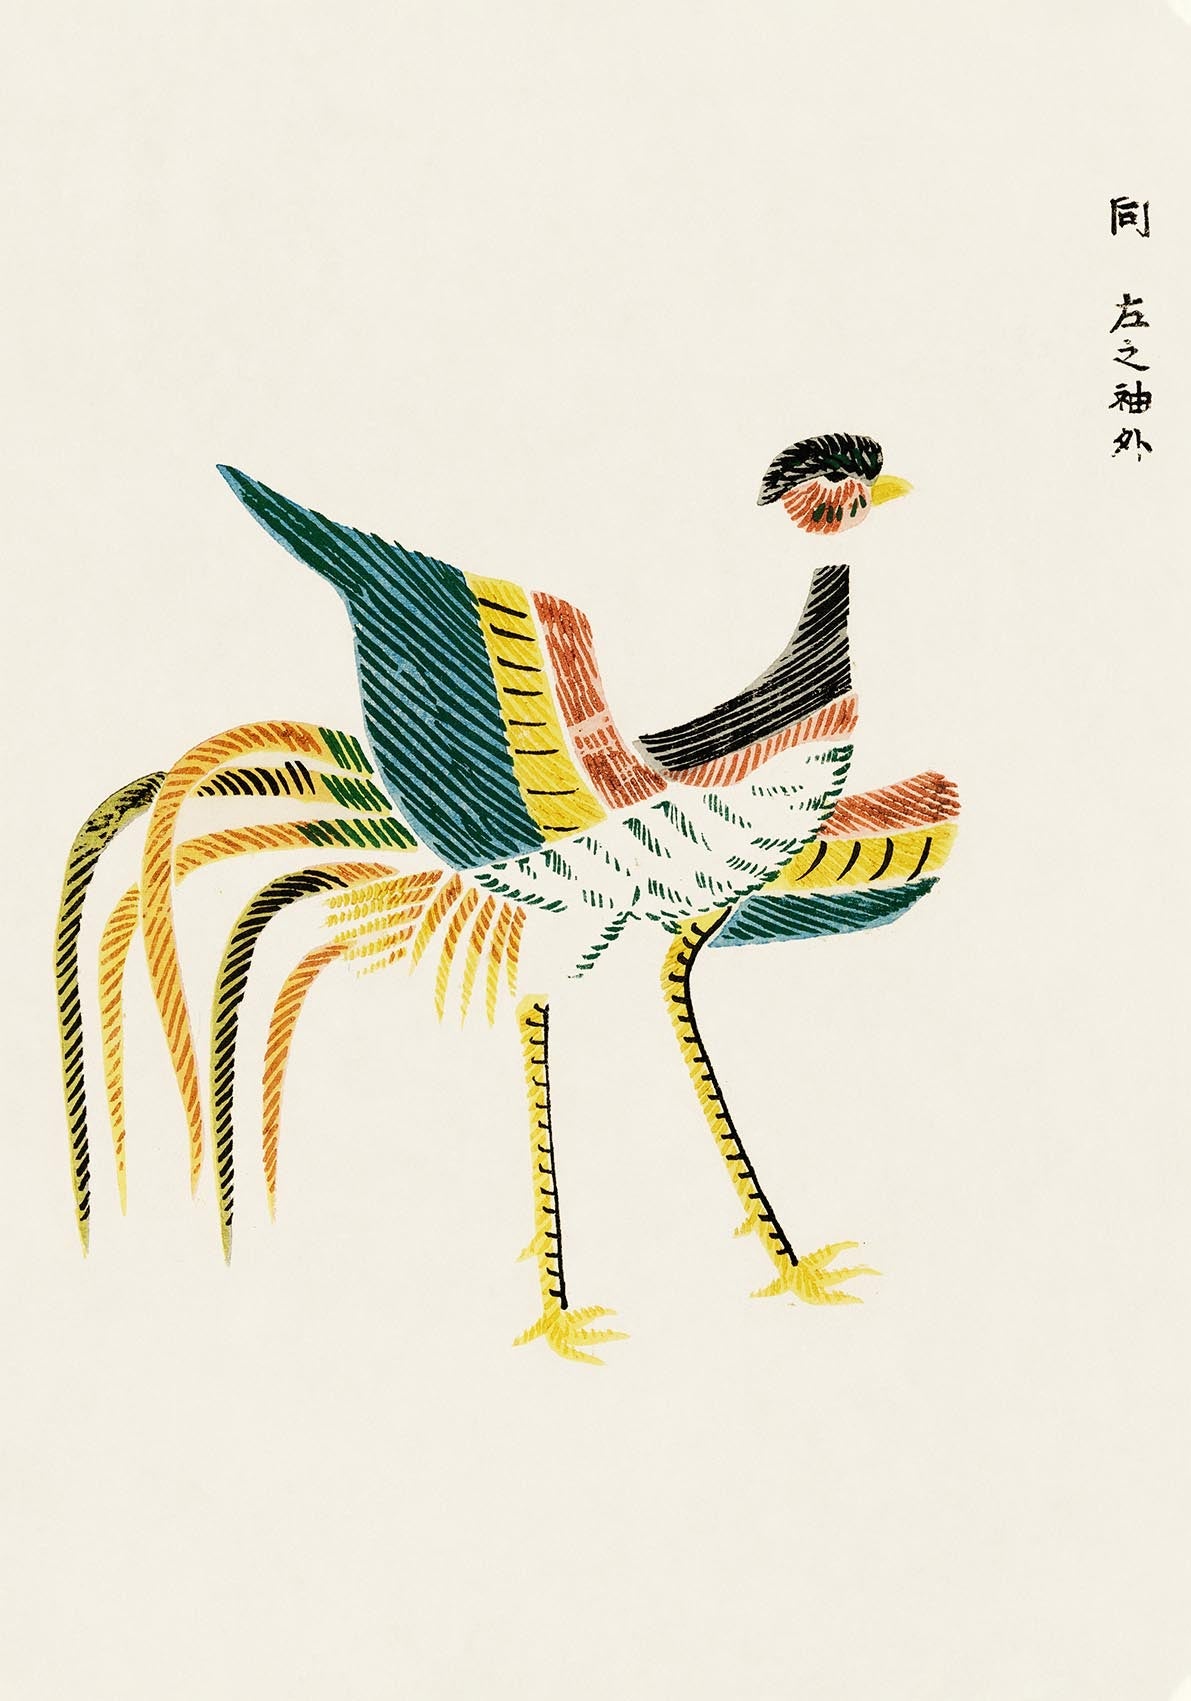 Japanese Cranes by Taguchi Tomoki No. 1